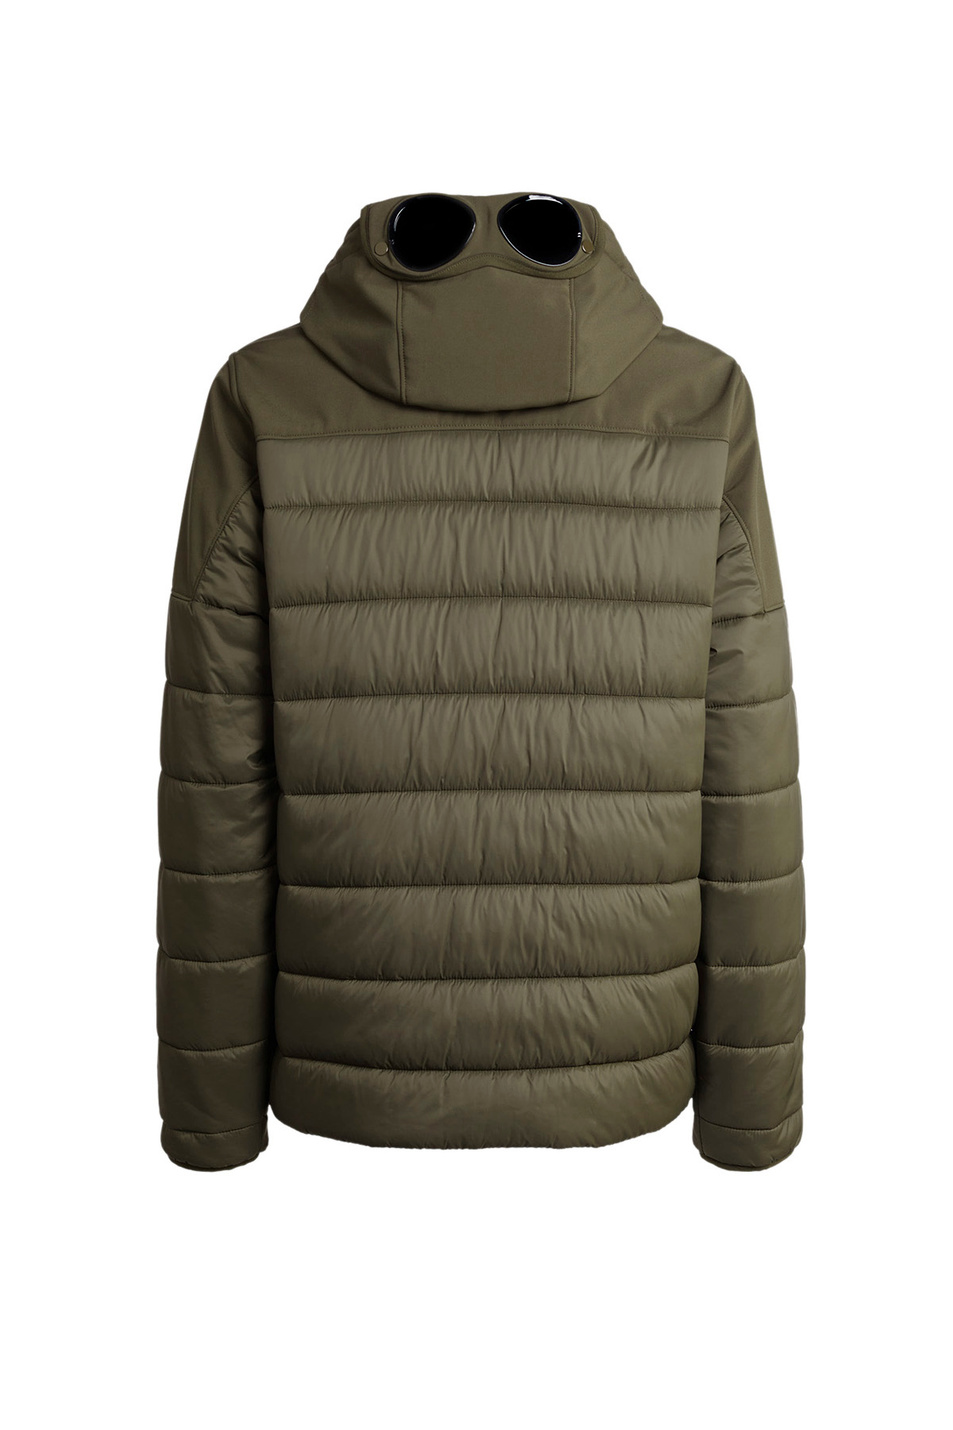 Мужской C.P. Company Куртка стеганая с фирменными линзами на капюшоне (цвет ), артикул 15CMOW014A006097M | Фото 2